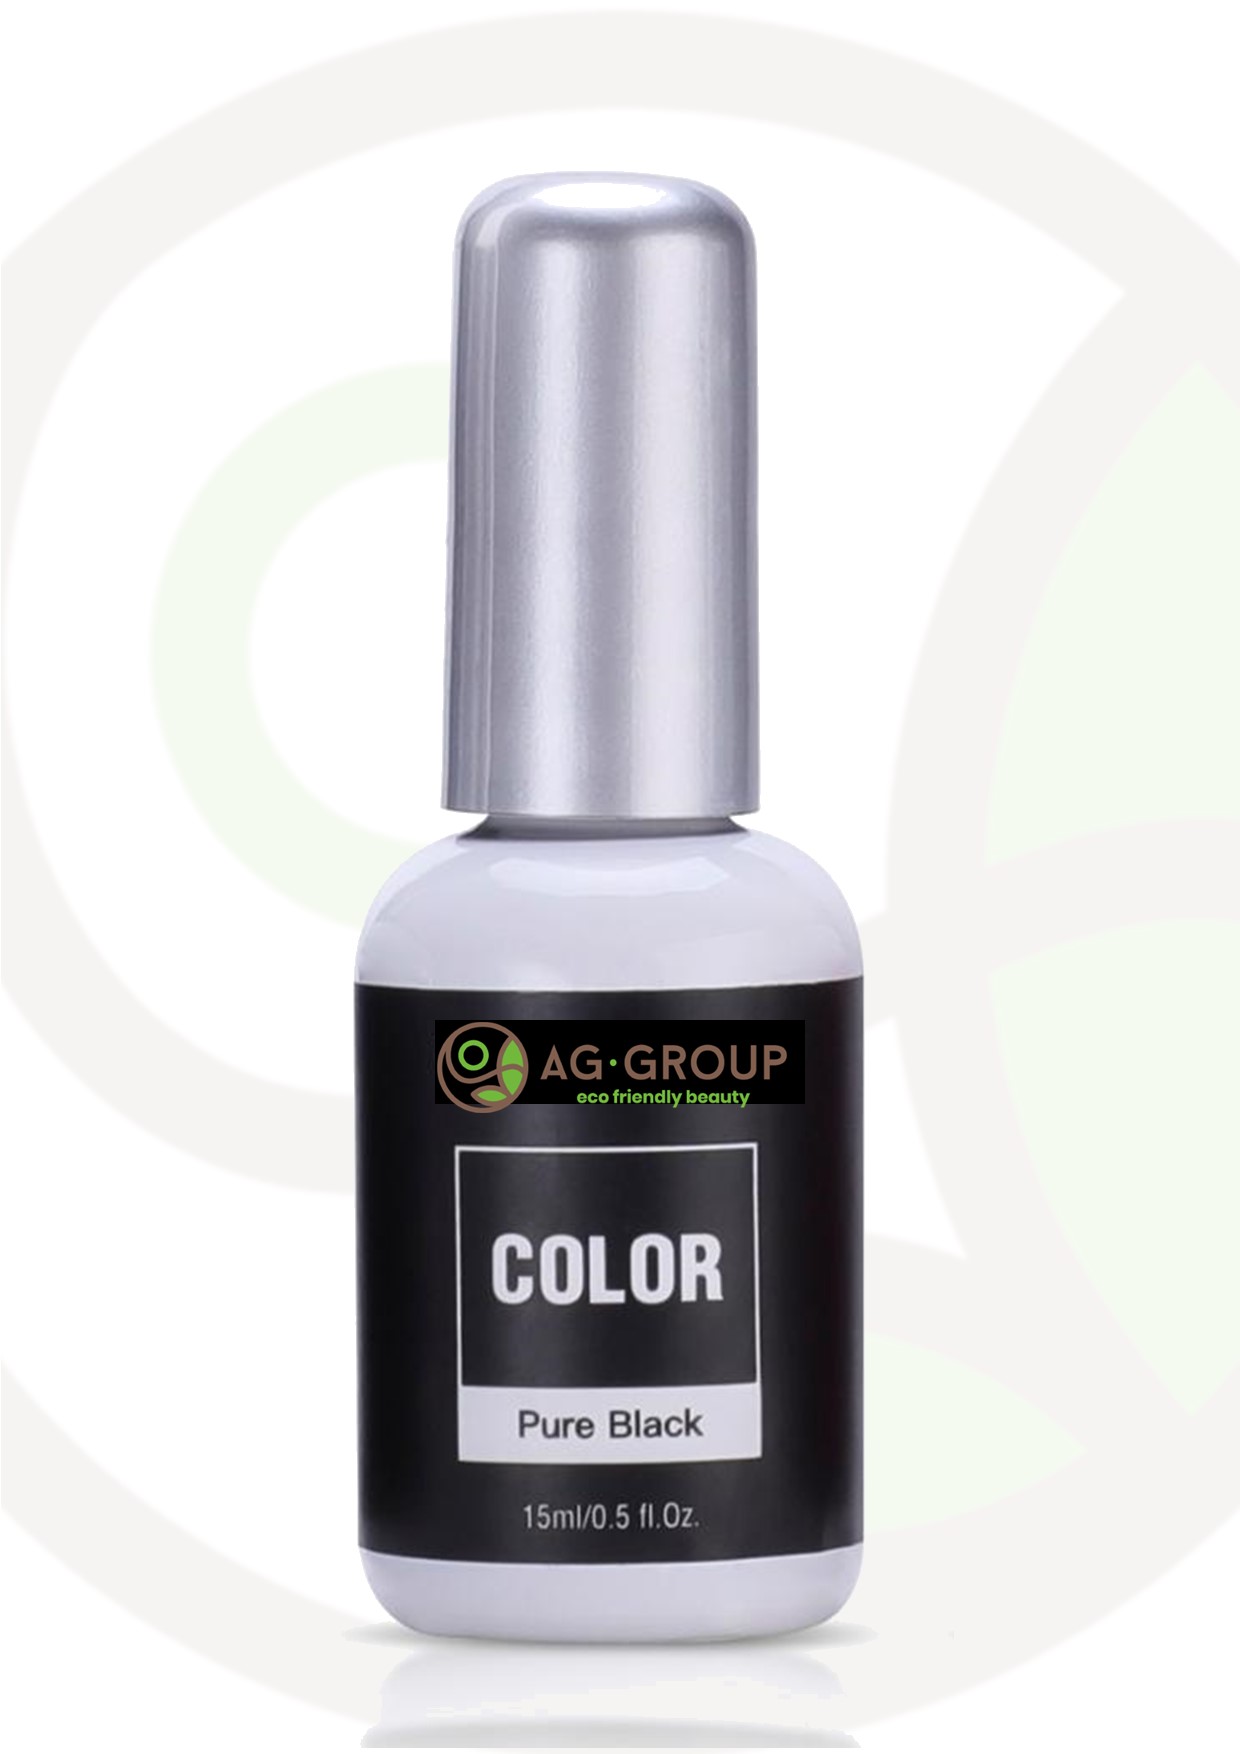 Featured image for “Gel polish soak -off led/uv- color pure black”